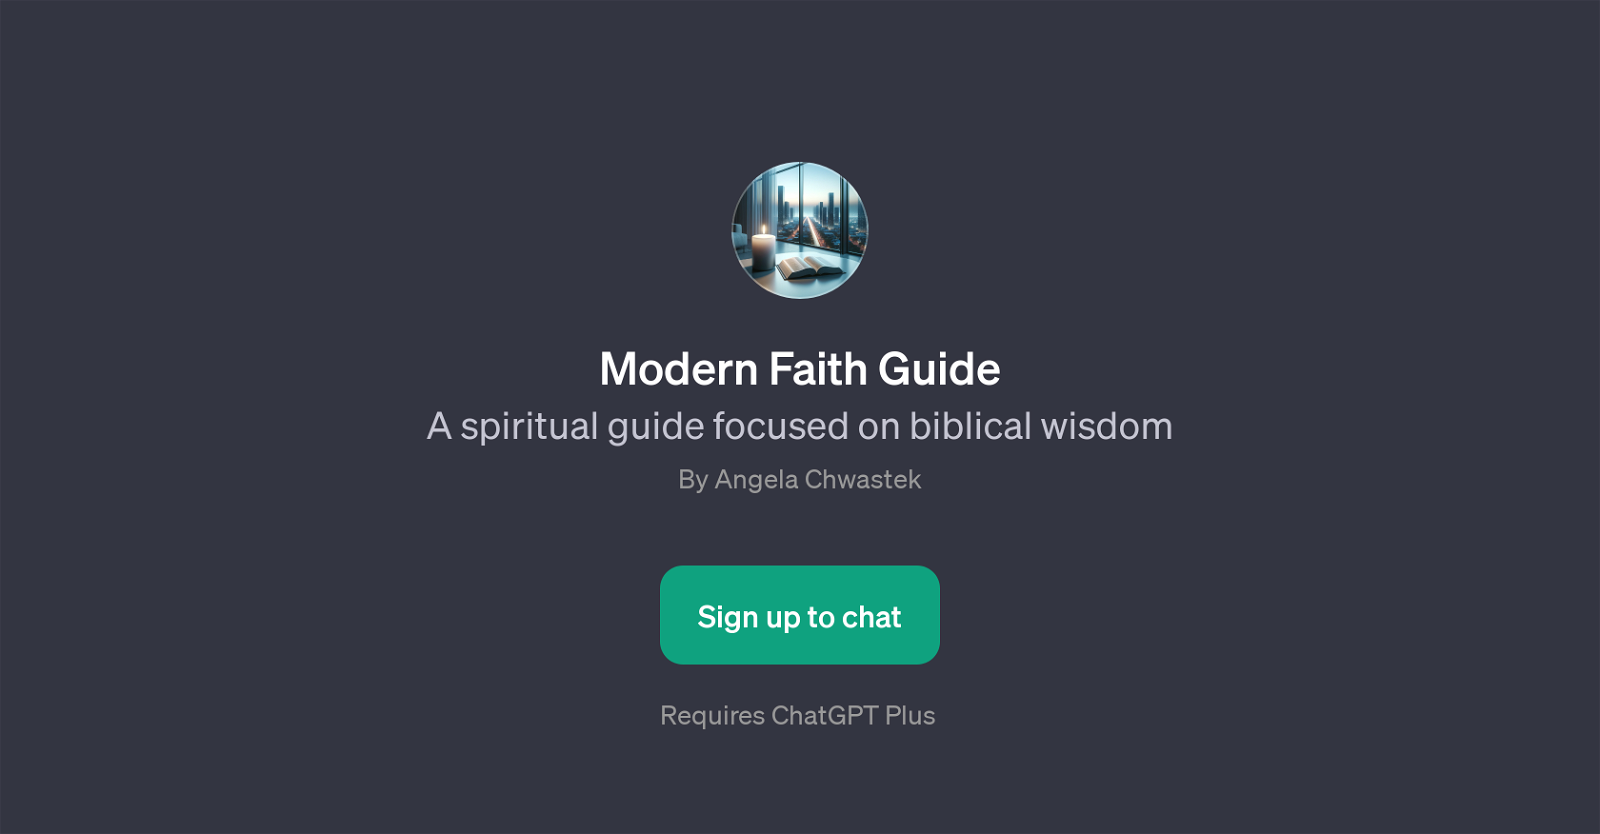 Modern Faith Guide website